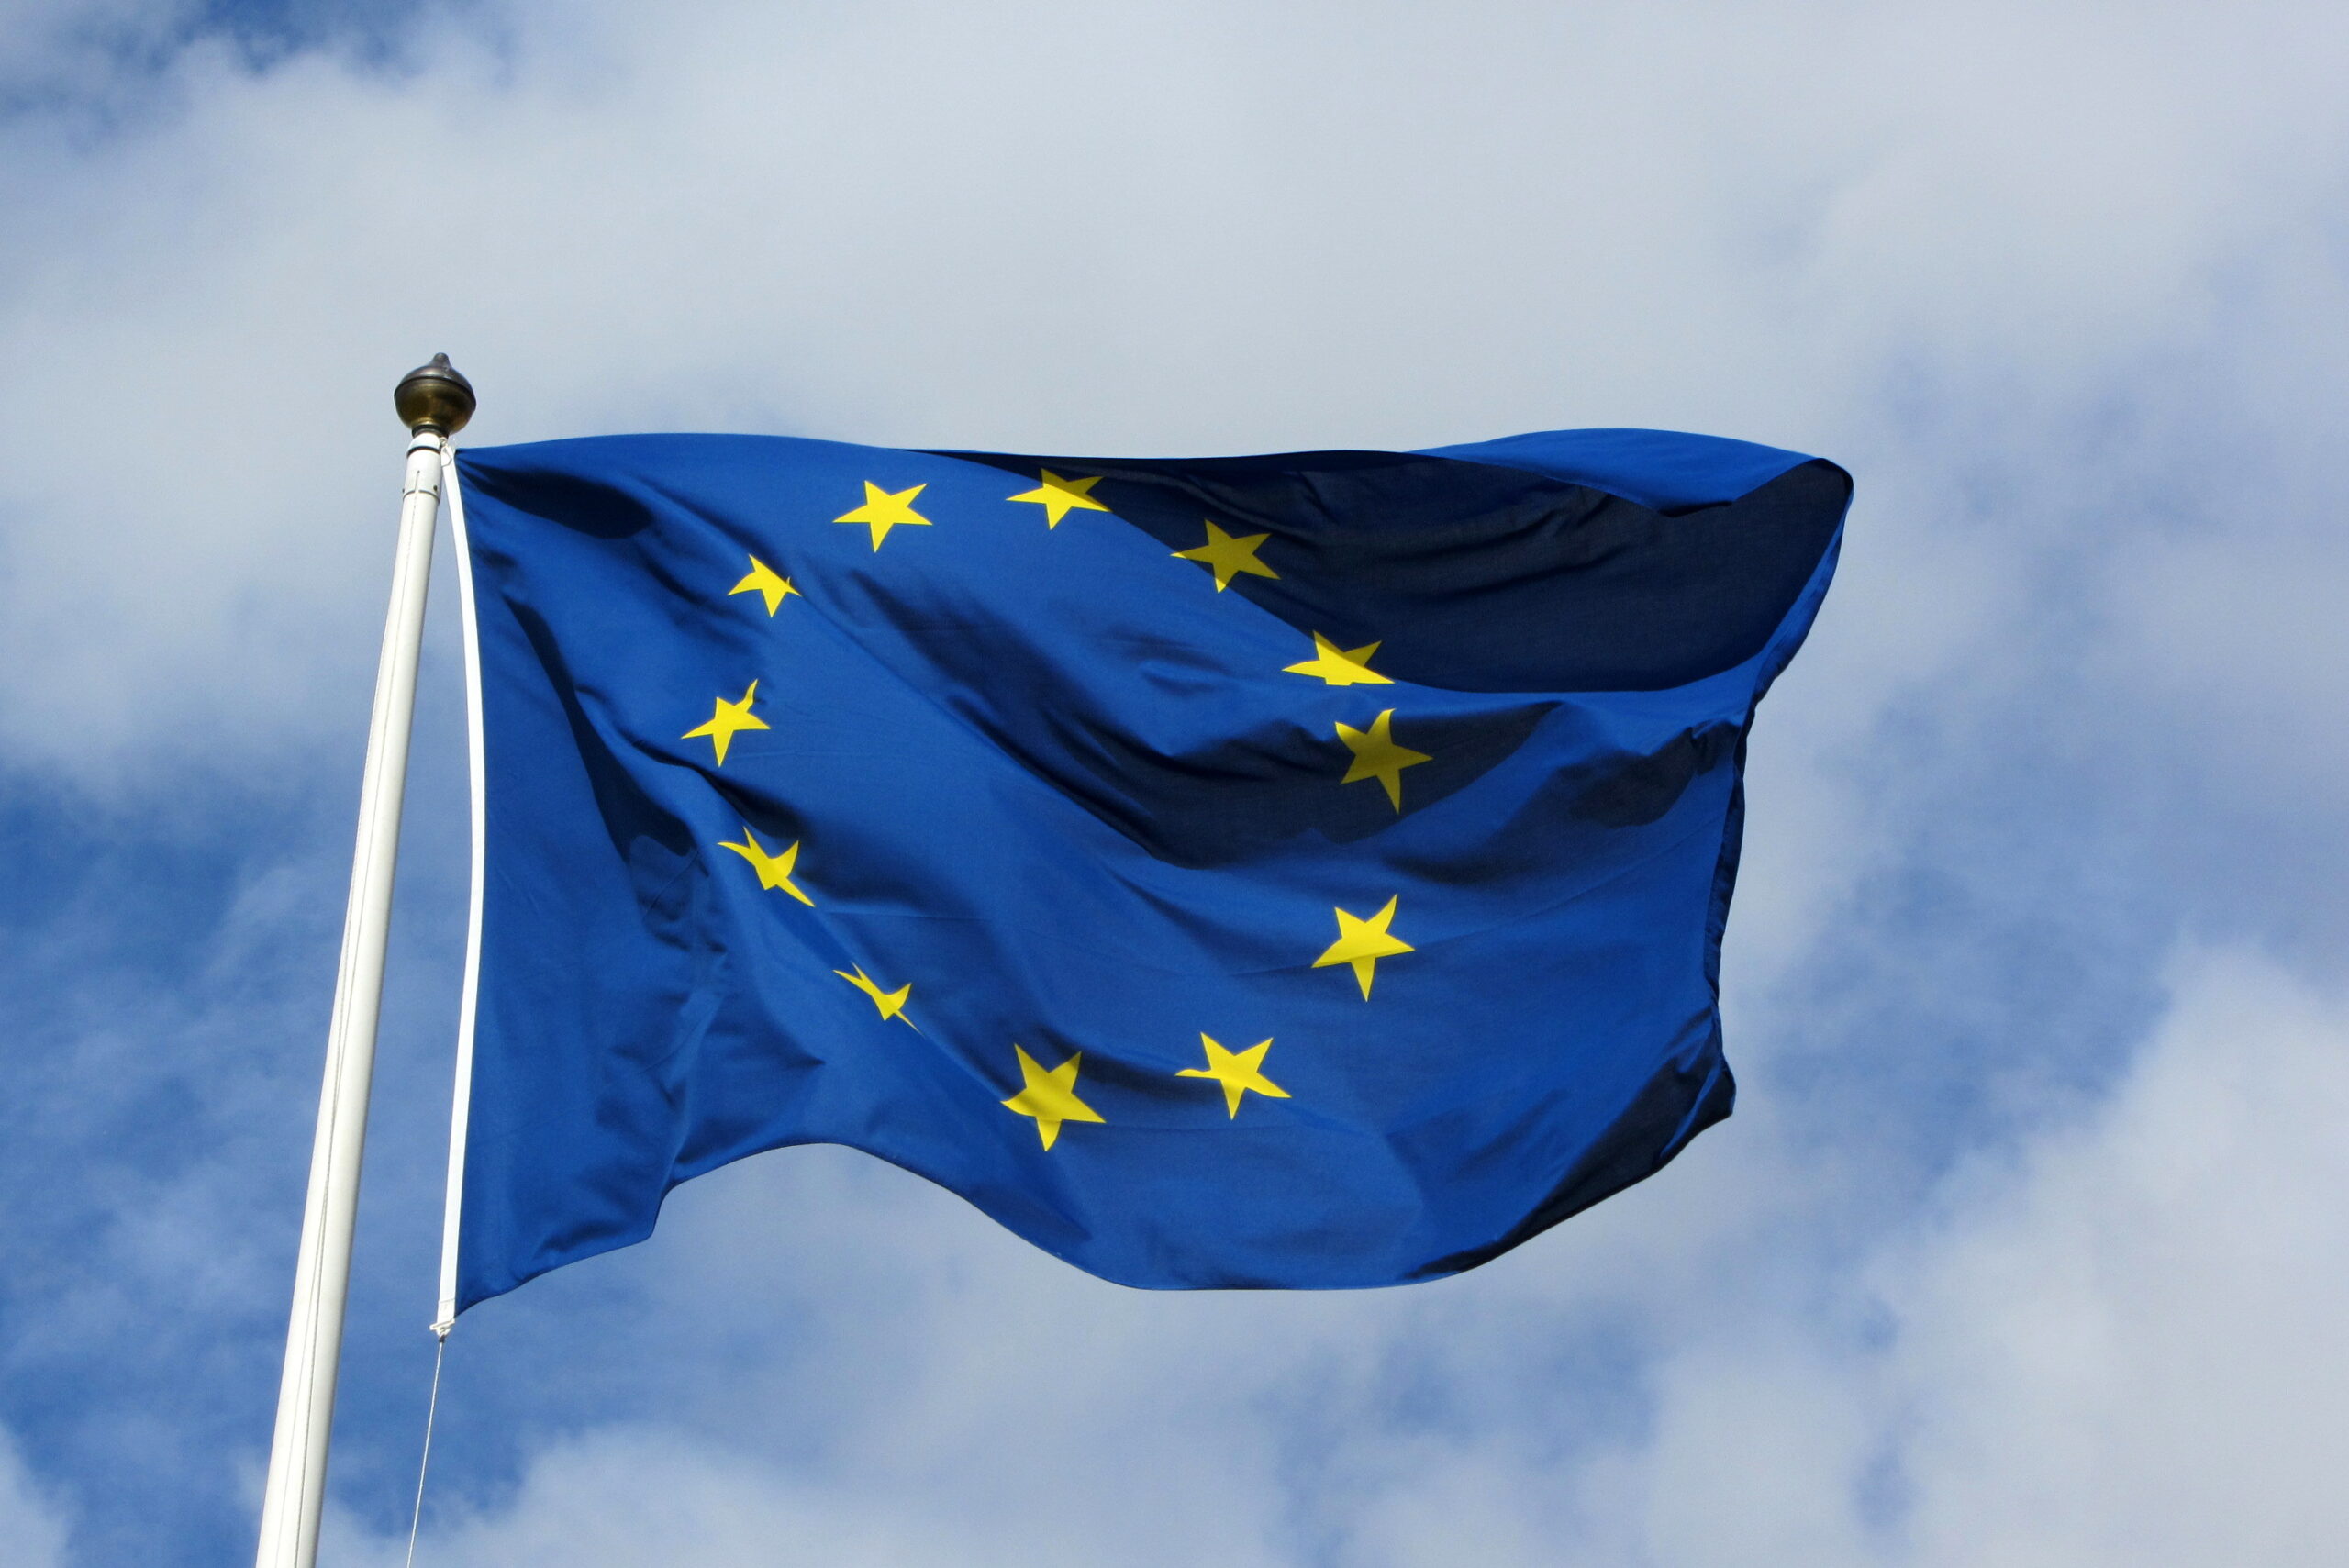 EU earmarks 39 million euros for Nigeria’s 2023 general elections